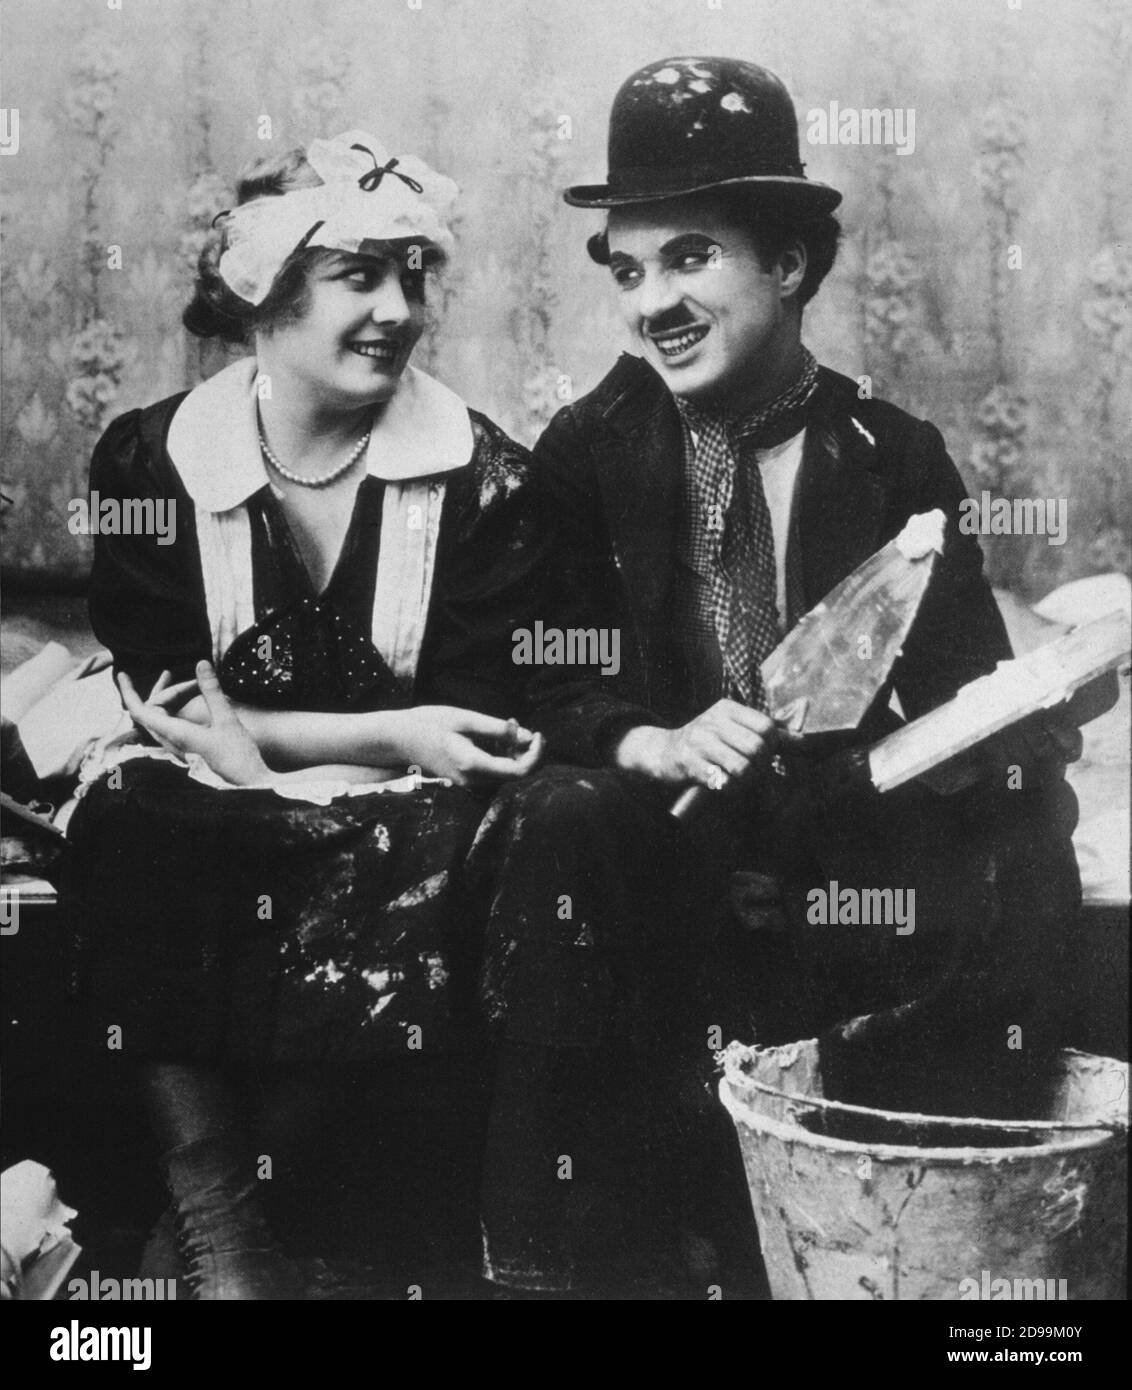 CHARLES  CHAPLIN  ( 1889 - 1977 ) and Edna Purviance ( 1894 - 1958 ) in WORK ( 1915 - Charlot apprendista ) - muratore - bombetta - bowler hat - derby ----  Archivio GBB Stock Photo